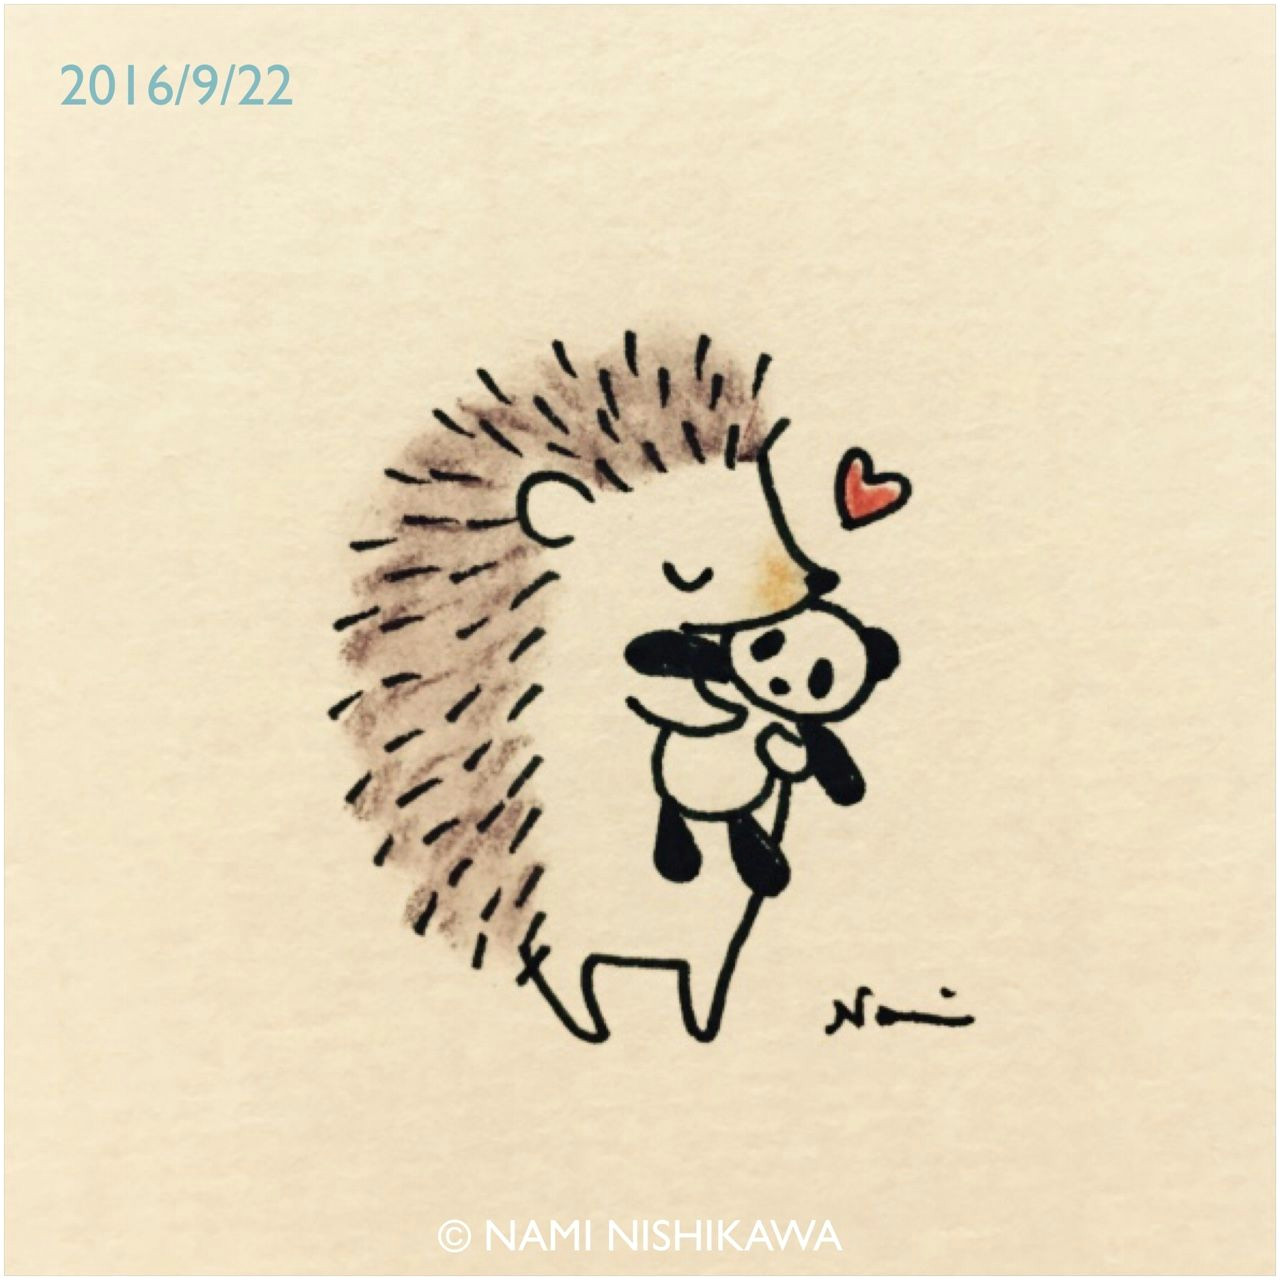 Drawing A Cartoon Hedgehog Hedgehogs Love Pandas too D N Don N N Dod Hedgehog Hedgehog Drawing